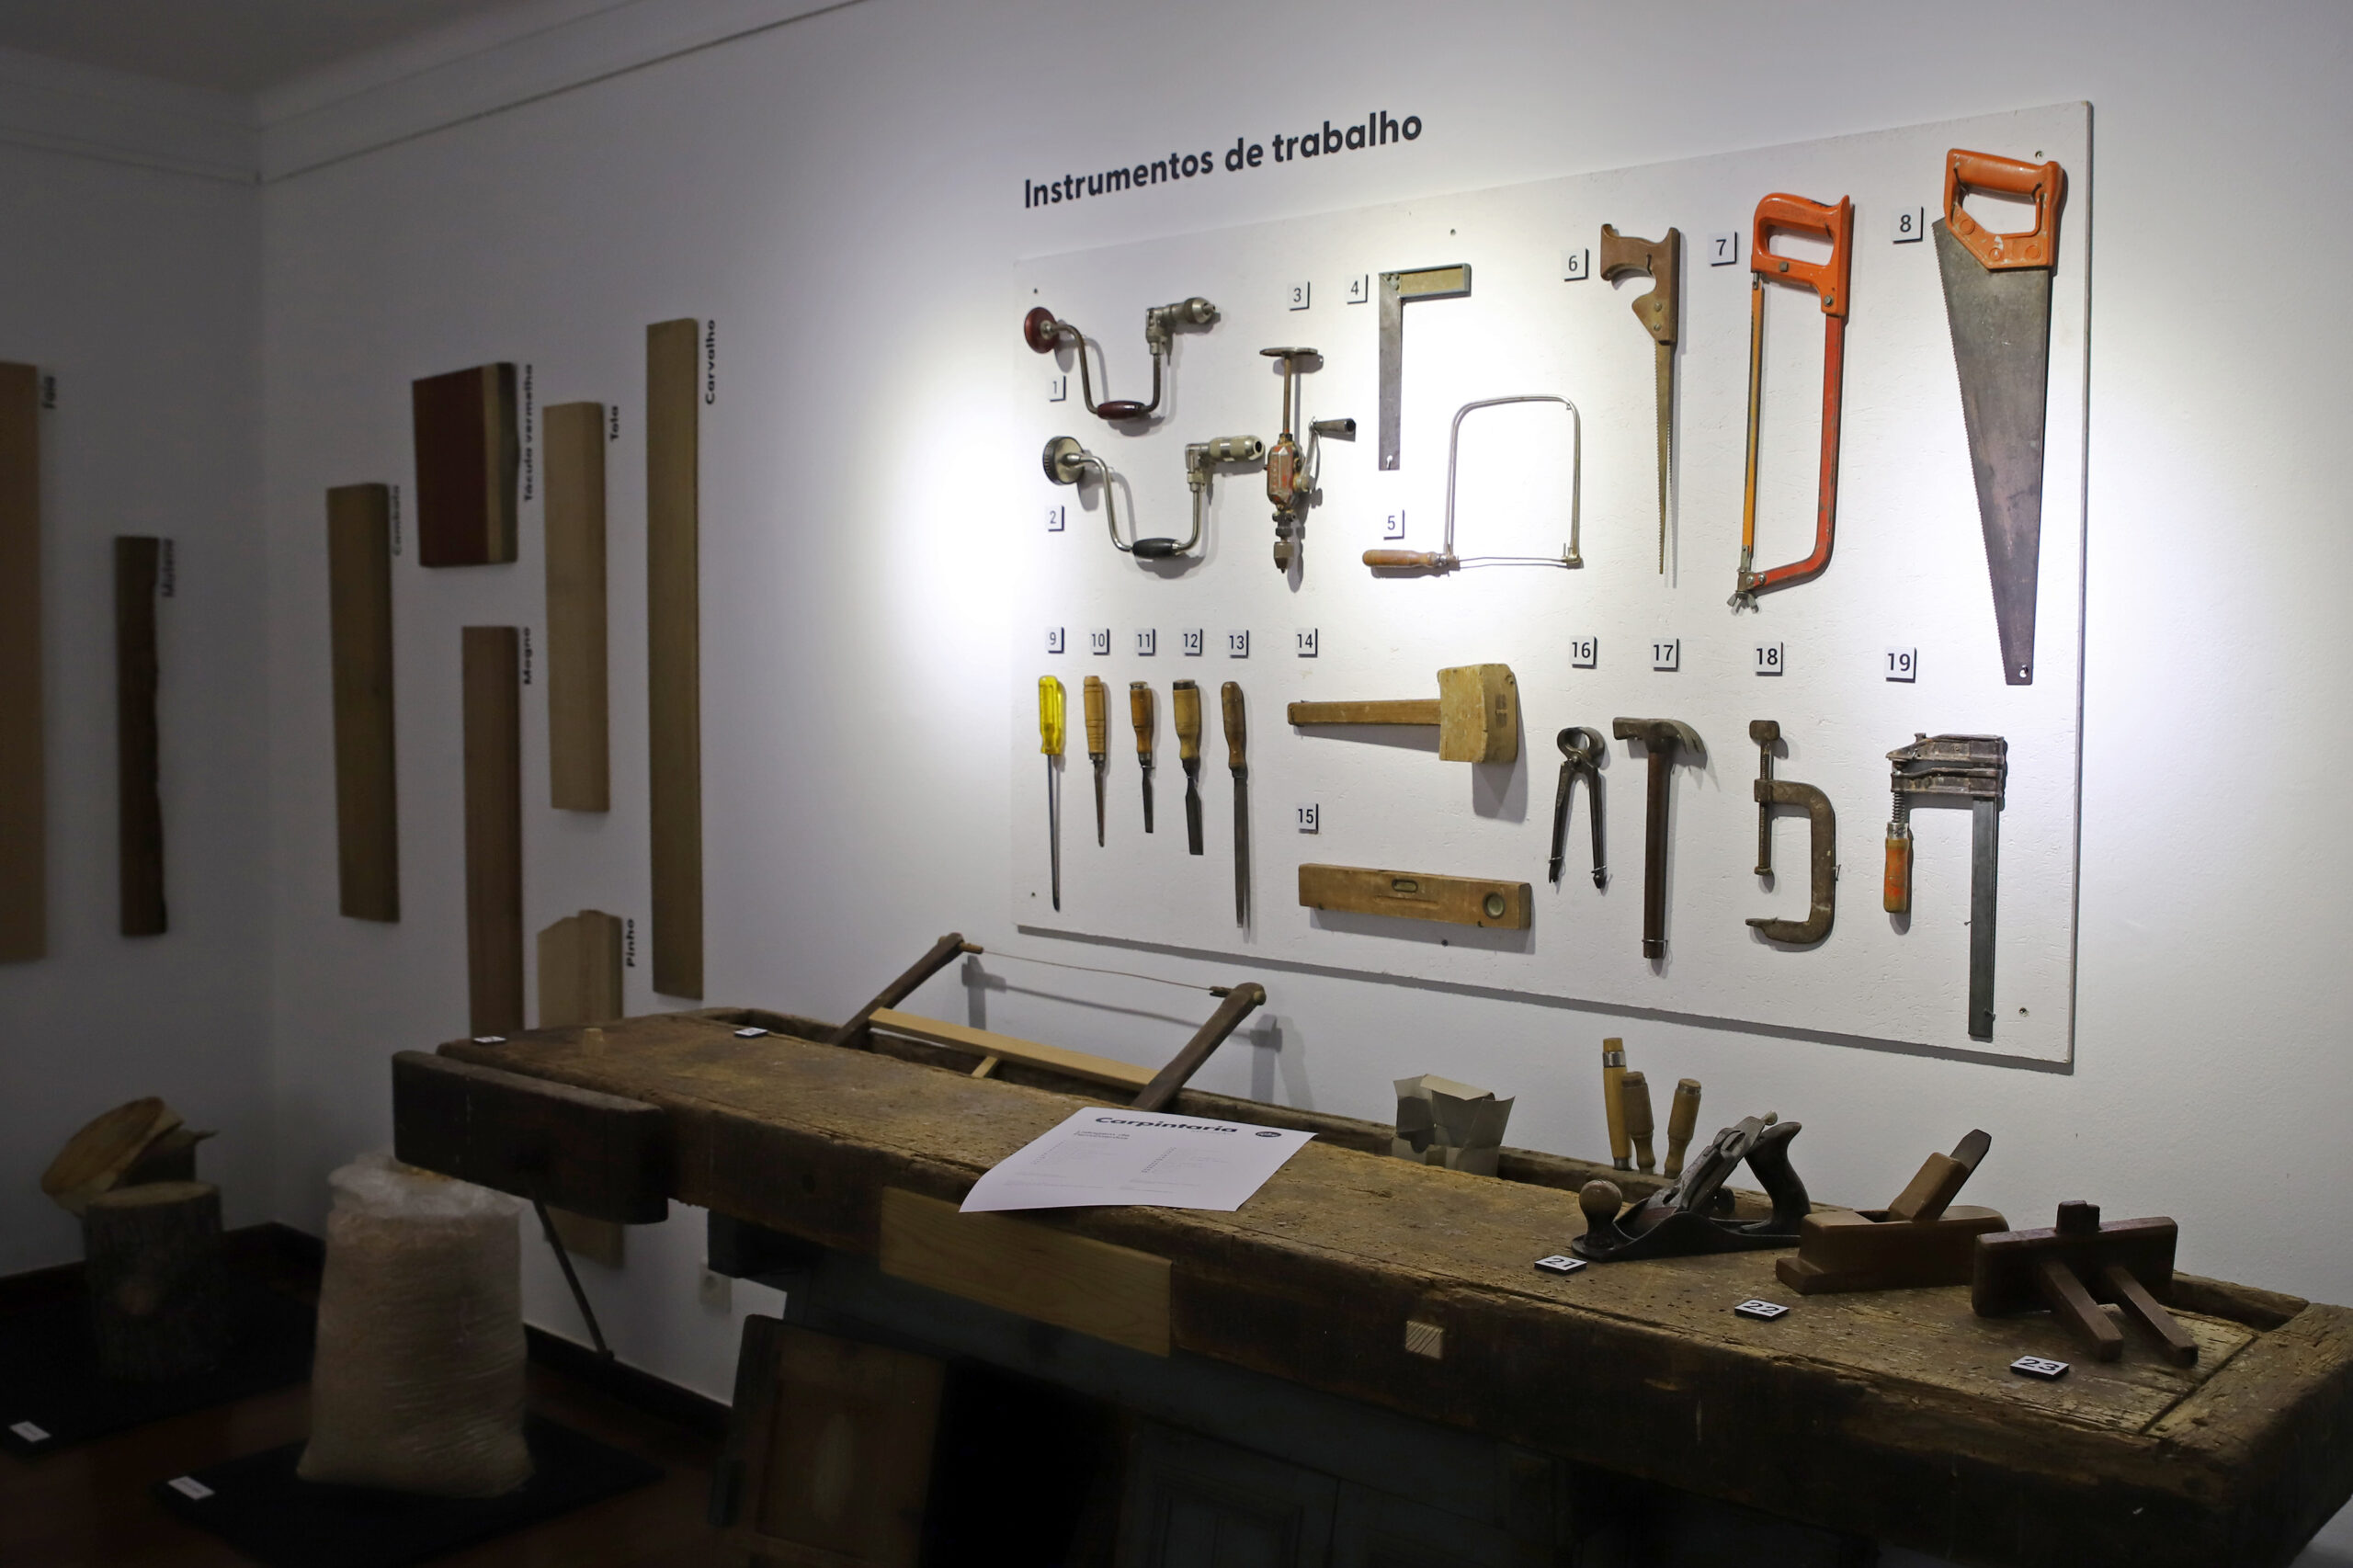 Museu do Trabalho Michel Giacometti mostra "Carpintaria"